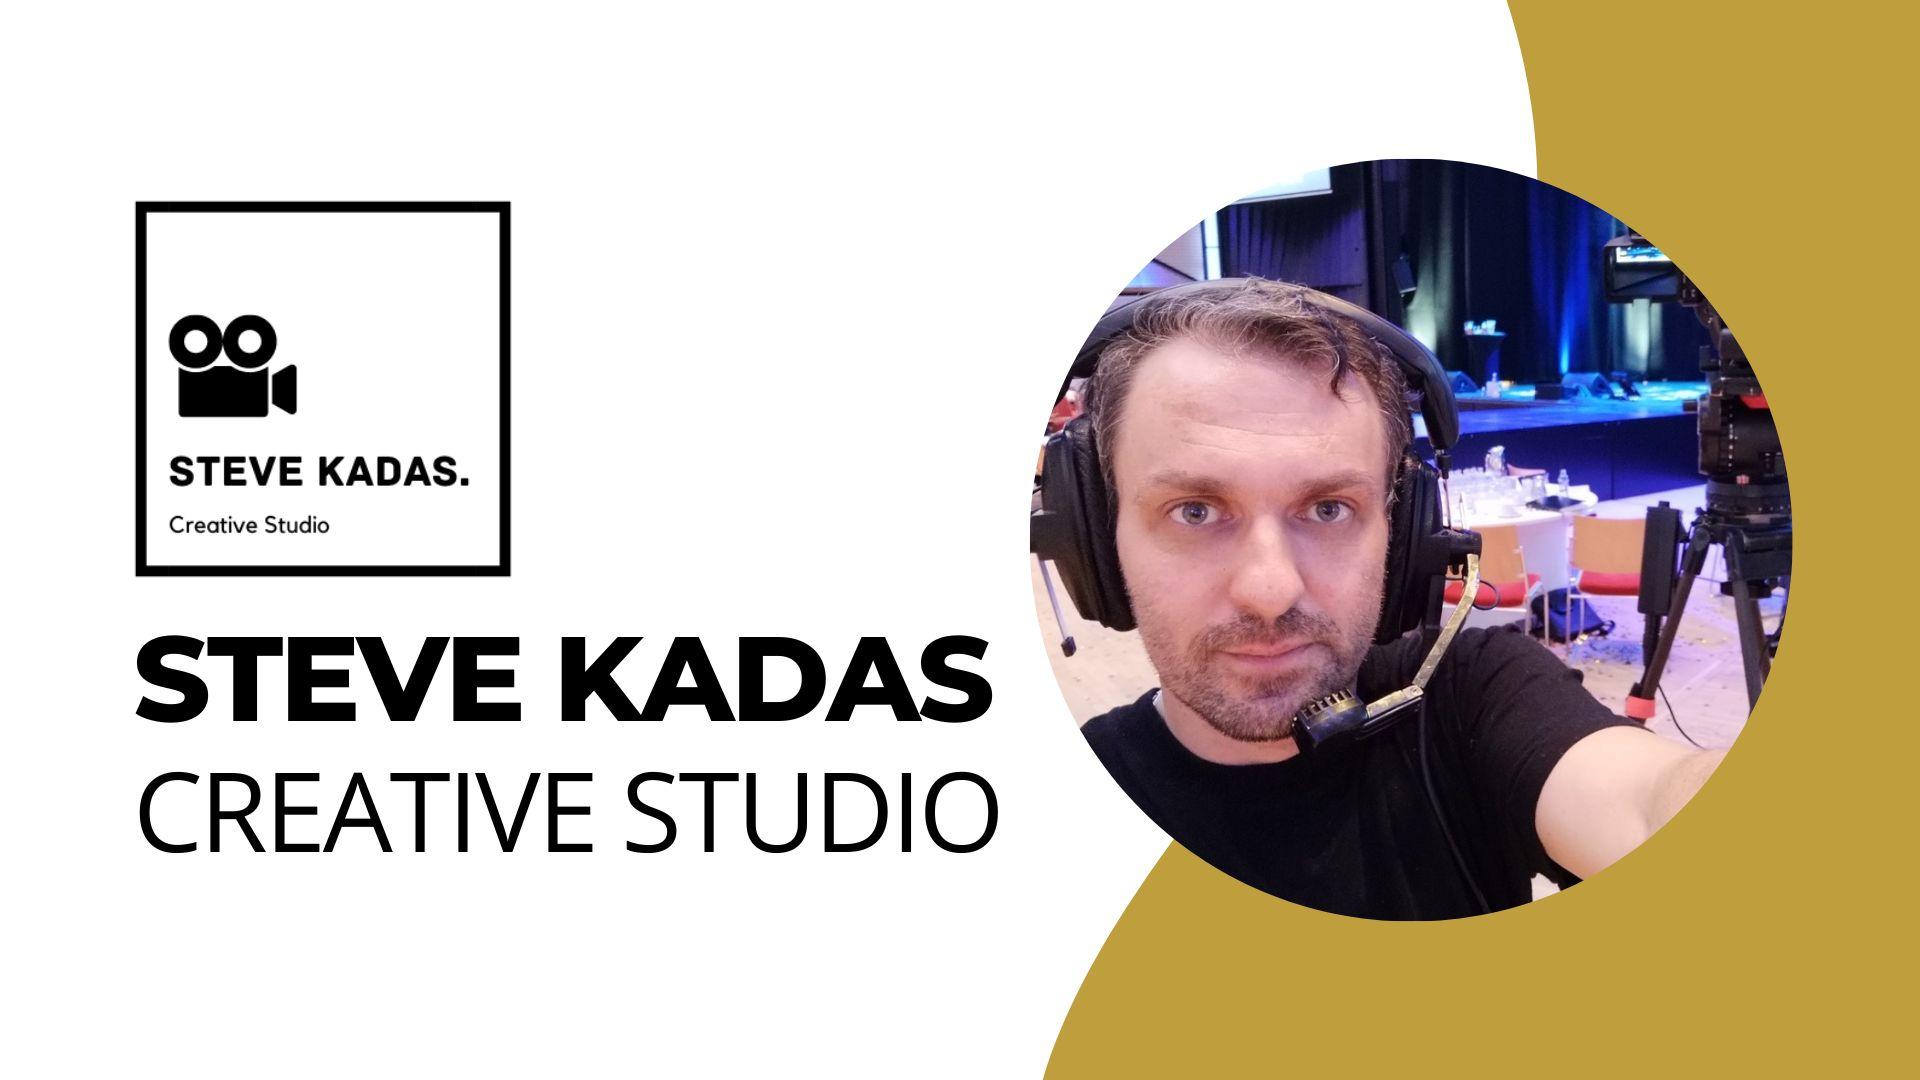 Steve Kadas- Creative Studio, Blog, Contact Me, CV, Gallery, Steve Kadas - Creative Studio, My Projects